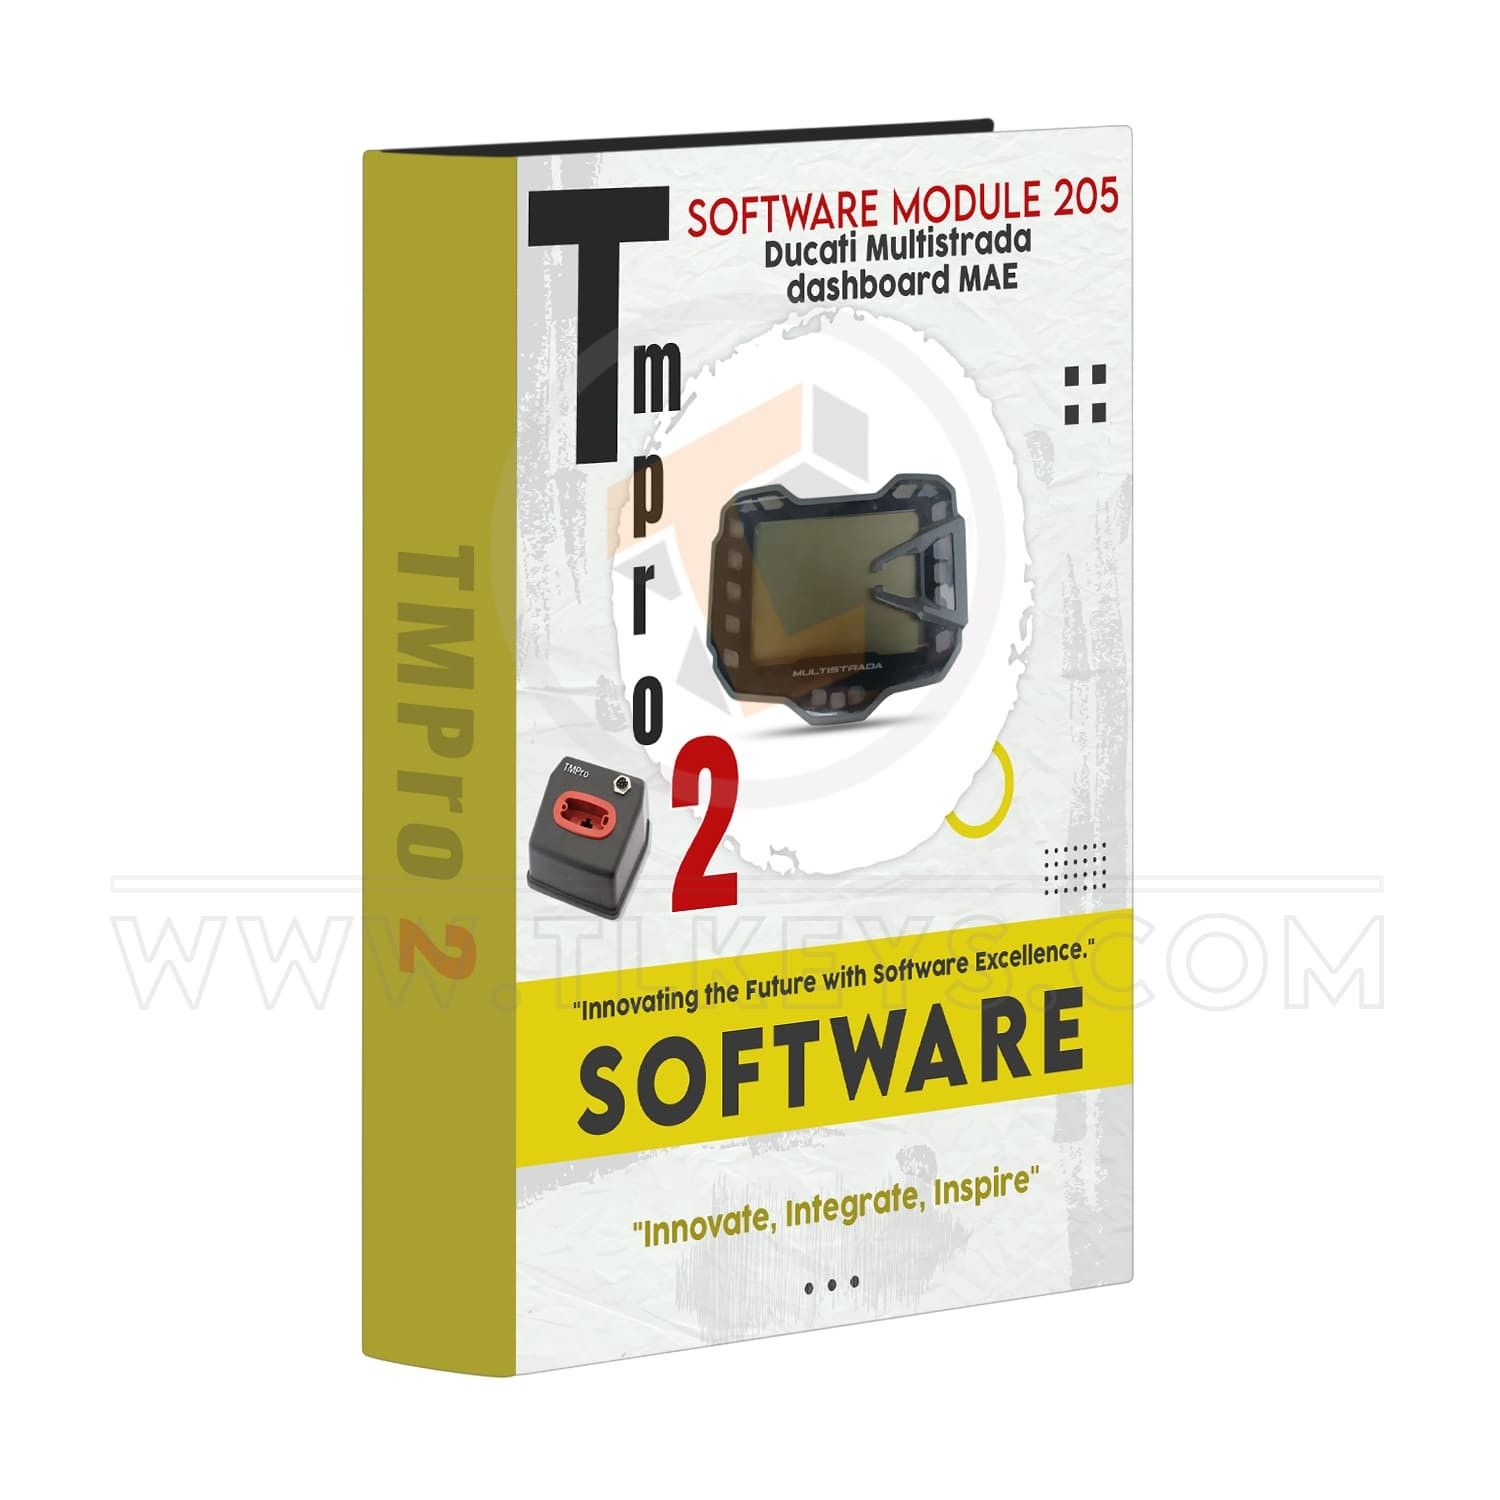 Tmpro 2 Tmpro 2 Software module 205 – Ducati Multistrada dashboard software